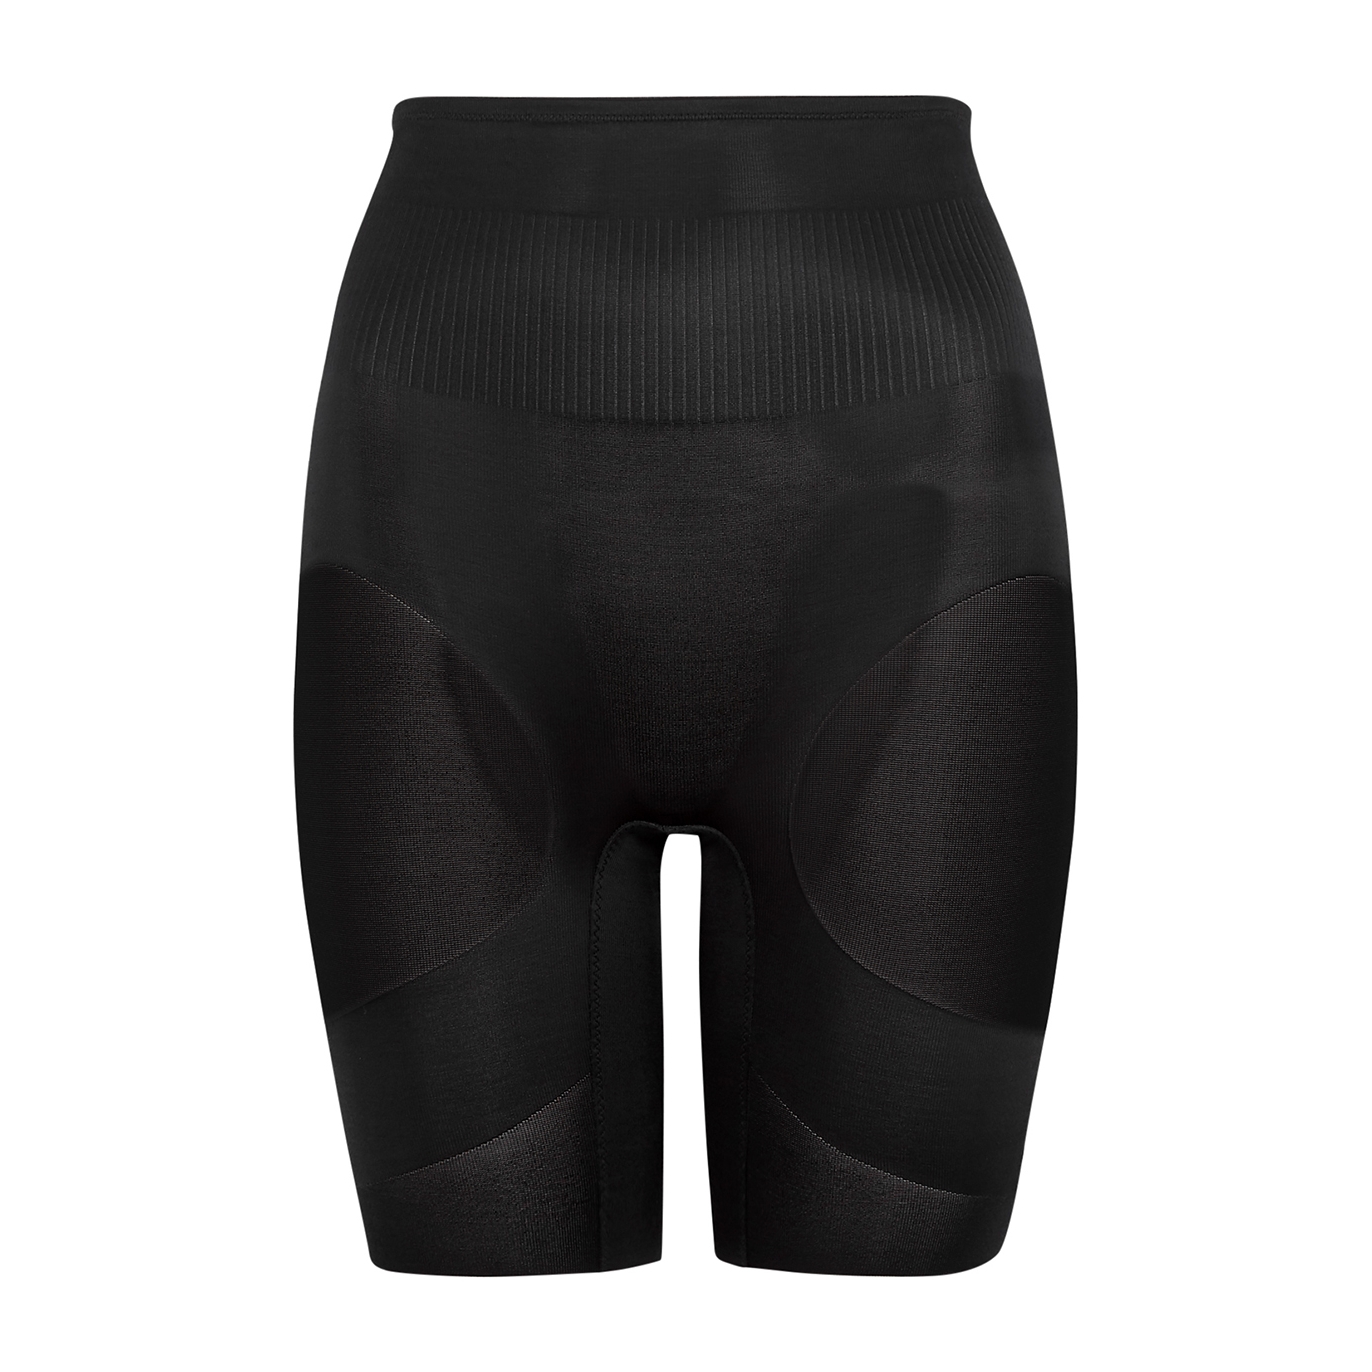 Wacoal Fit And Lift Black Shaping Shorts - S